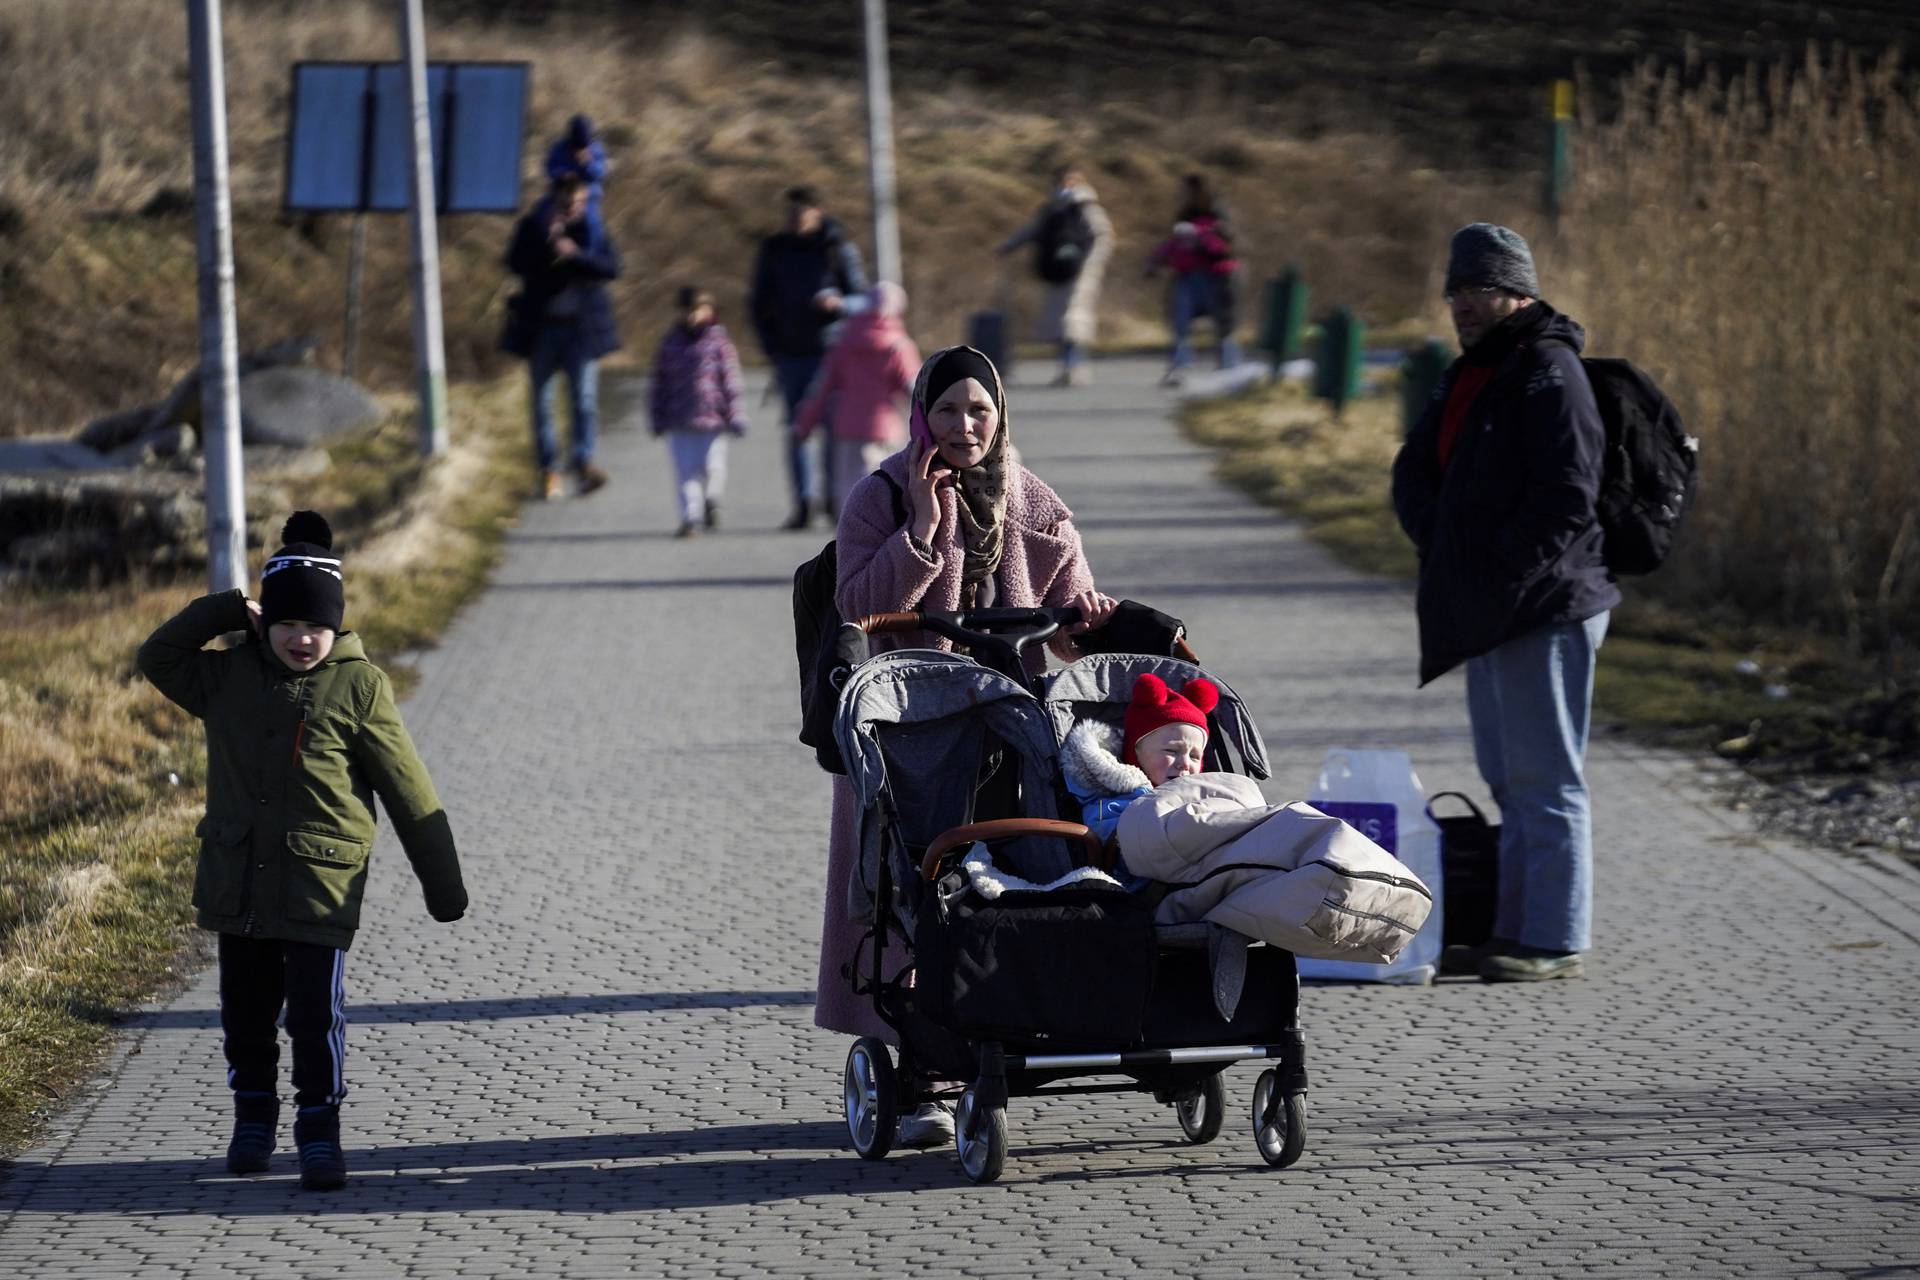 People arrive in Poland after fleeing Ukraine